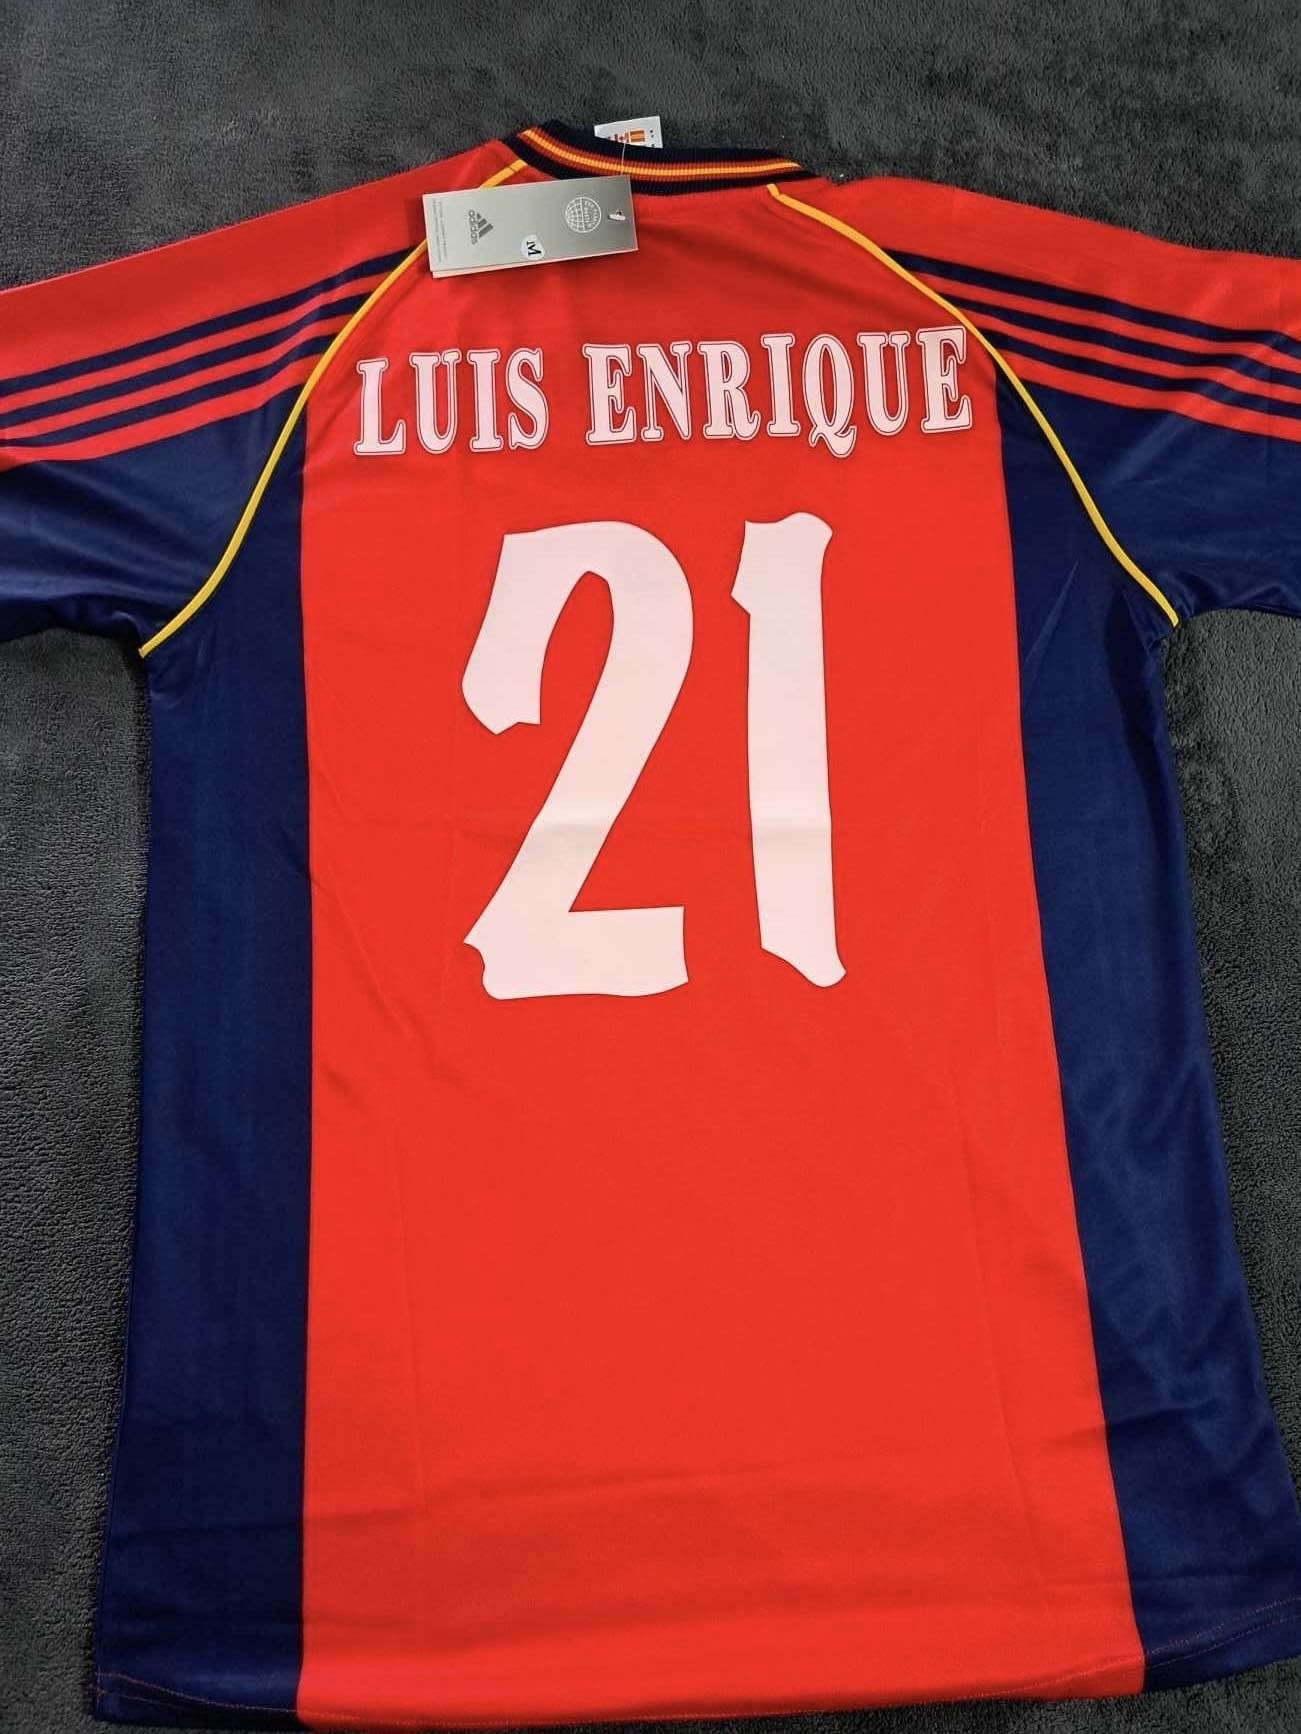 Vând tricou Spania - Luis Enrique